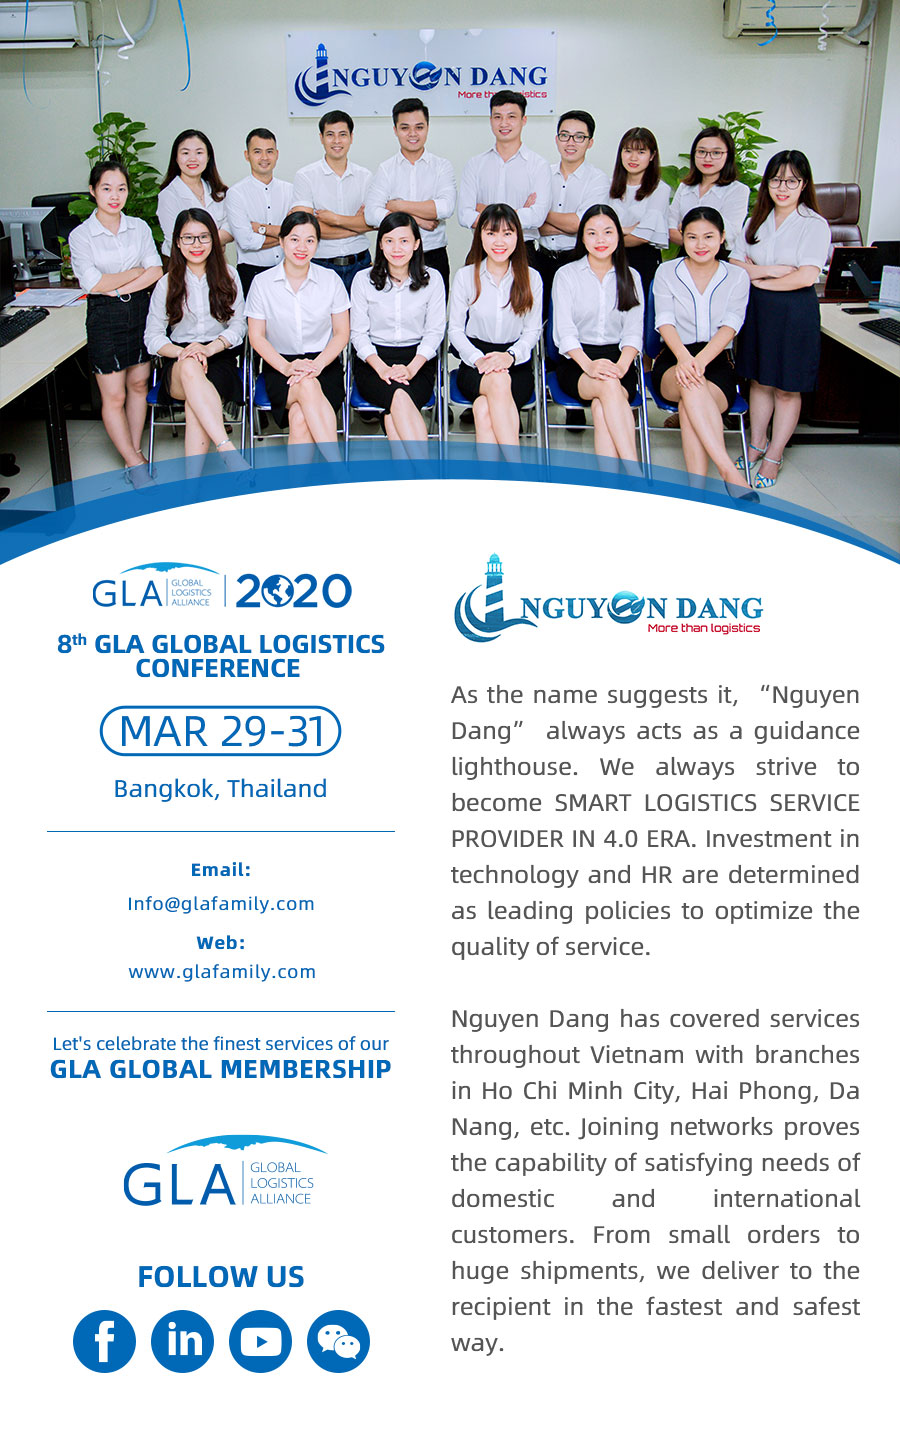 GLA New Membership —— NGUYEN DANG VIETNAM CO.,LTD from Vietnam!